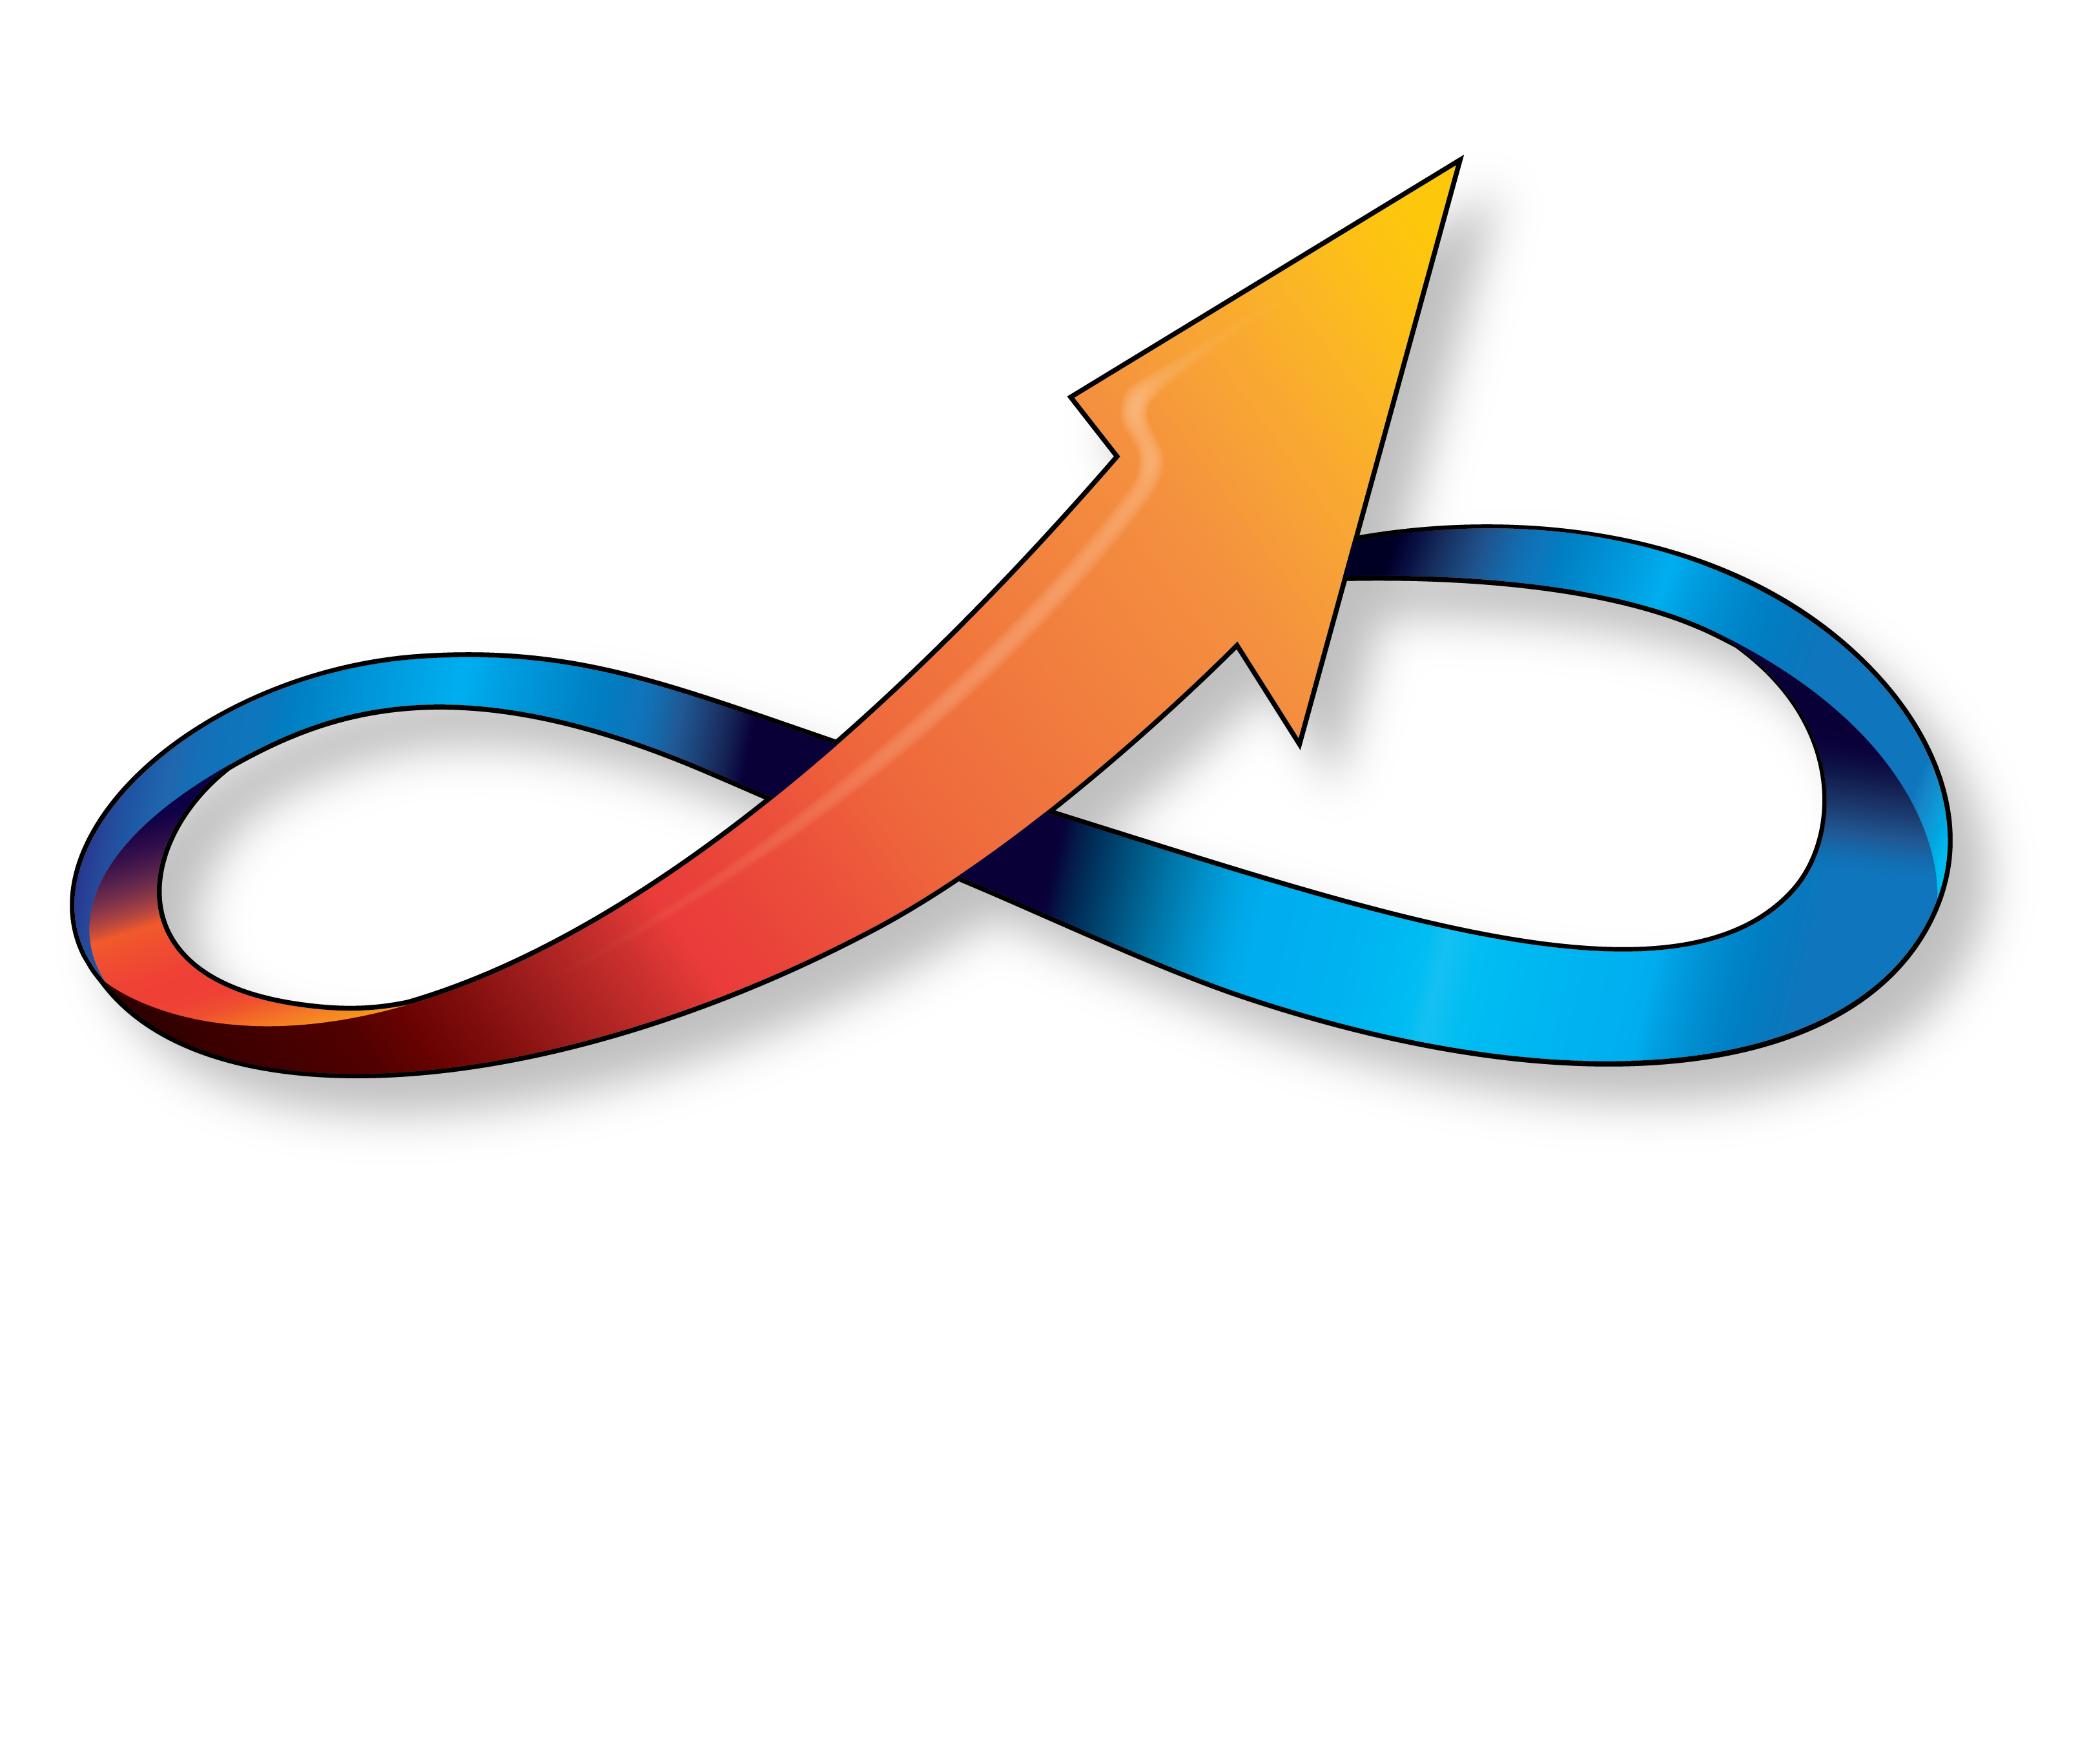 ADtensify